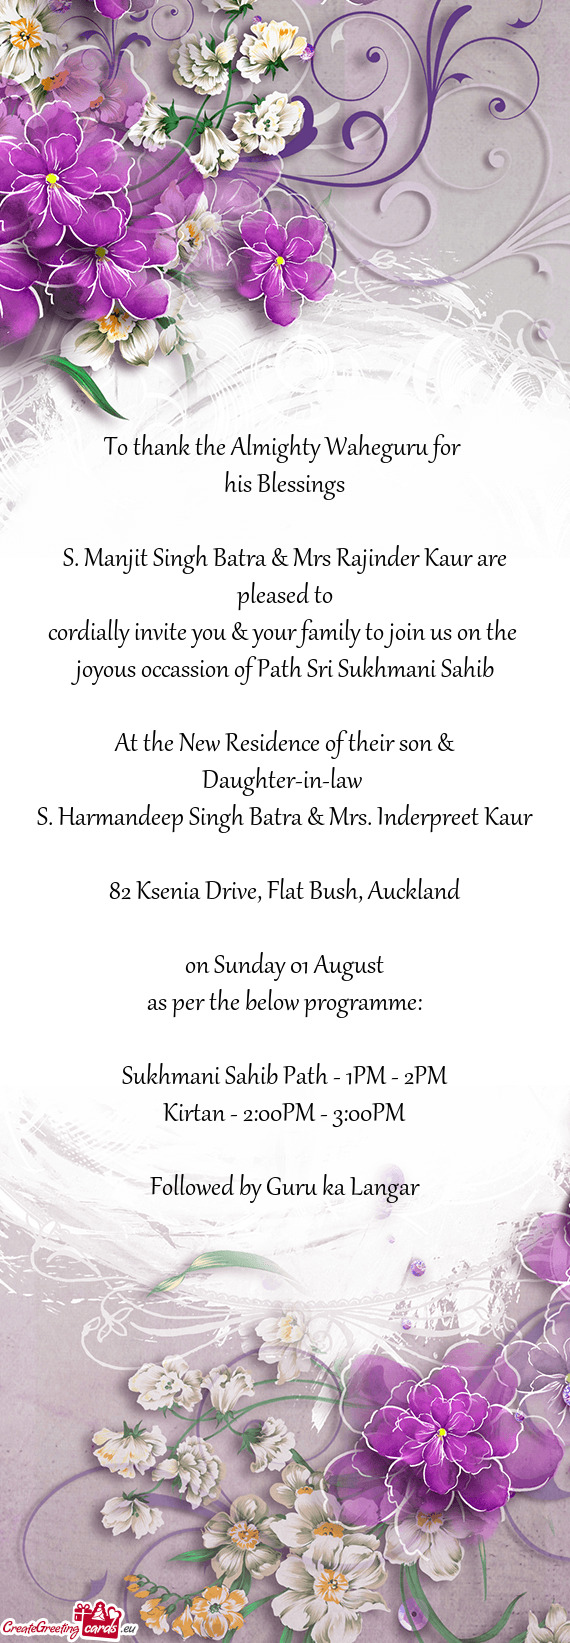 S. Manjit Singh Batra & Mrs Rajinder Kaur are pleased to